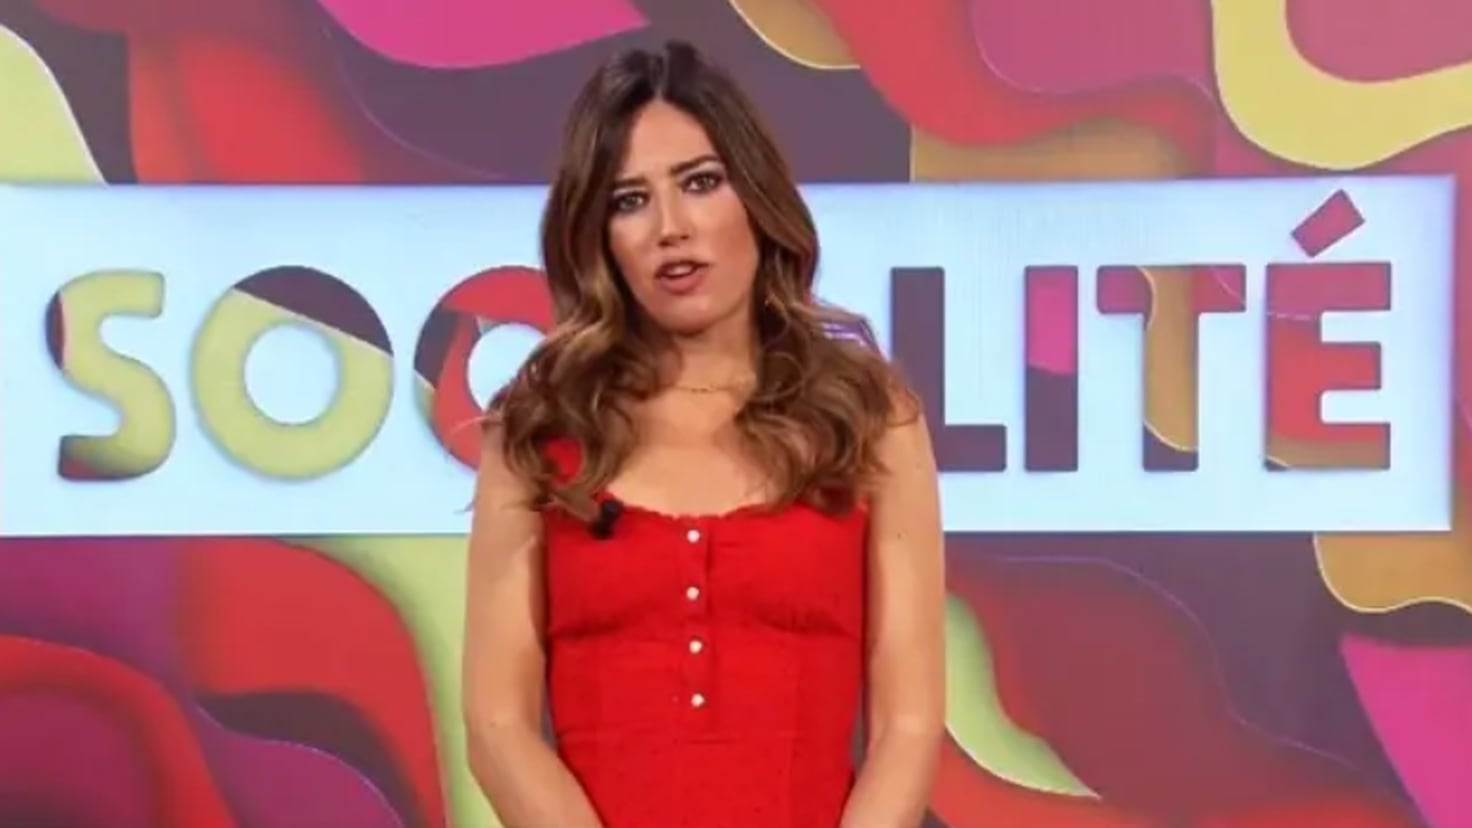 Mediaset also dismisses Nuria Marn at Socialit
